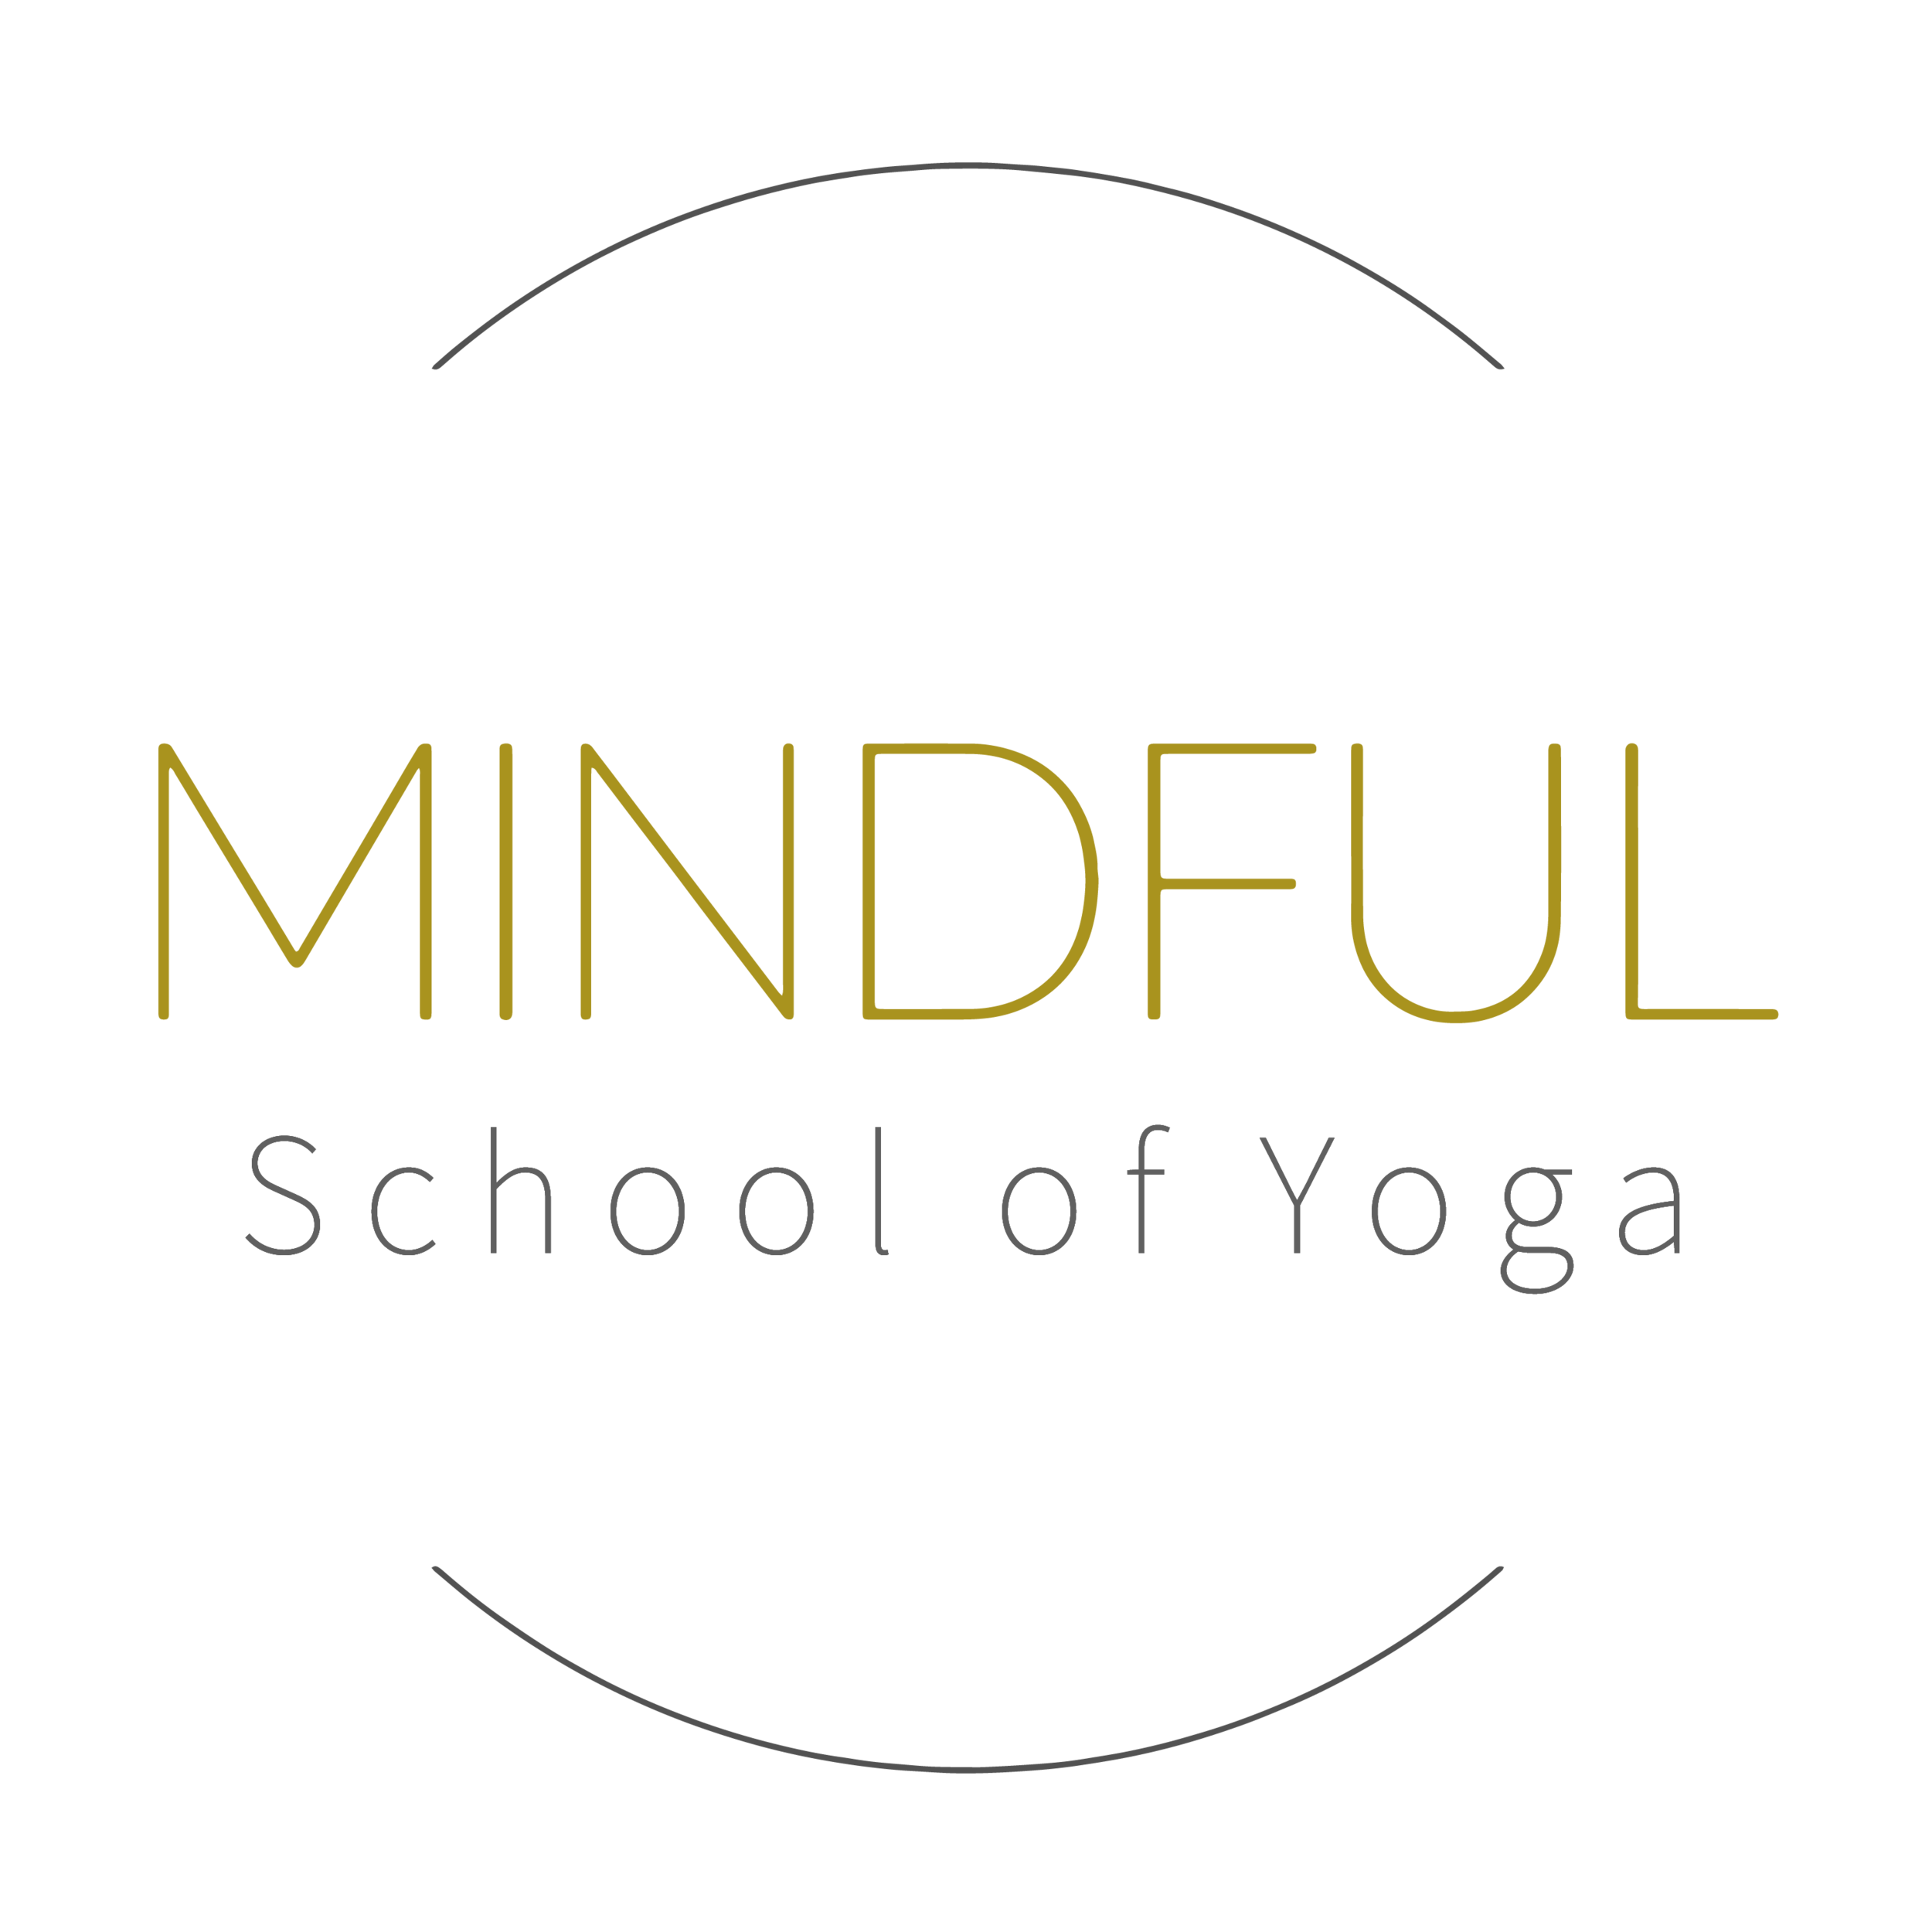 Mindful School of Yoga